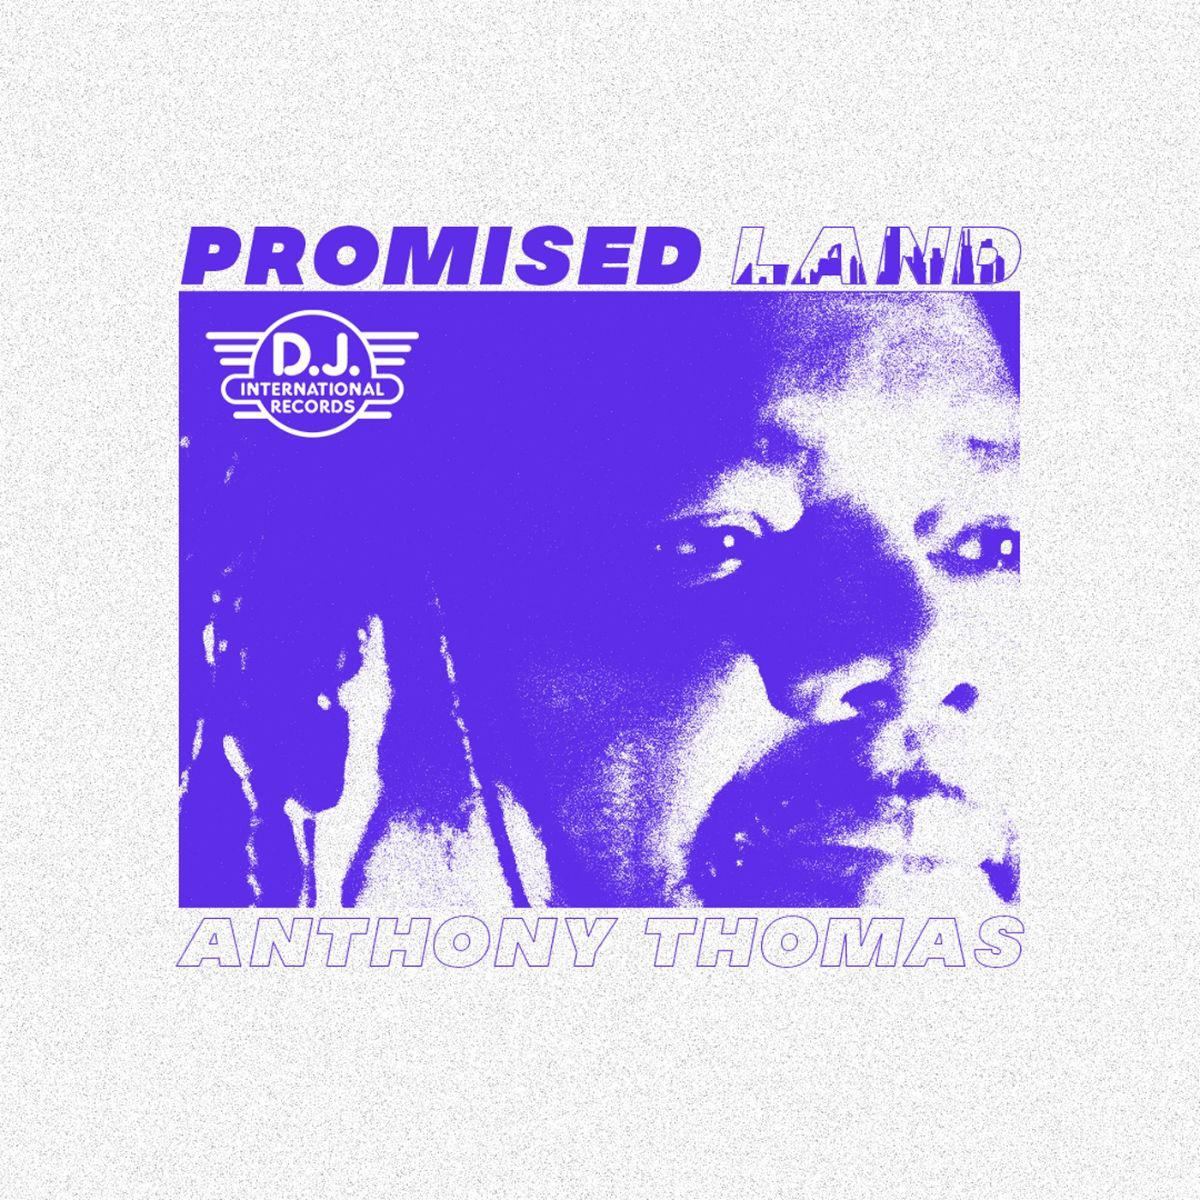 Iconic 80's Chicago House Label DJ INTERNATIONAL Relaunches With Anthony Thomas' 'Promised Land' 